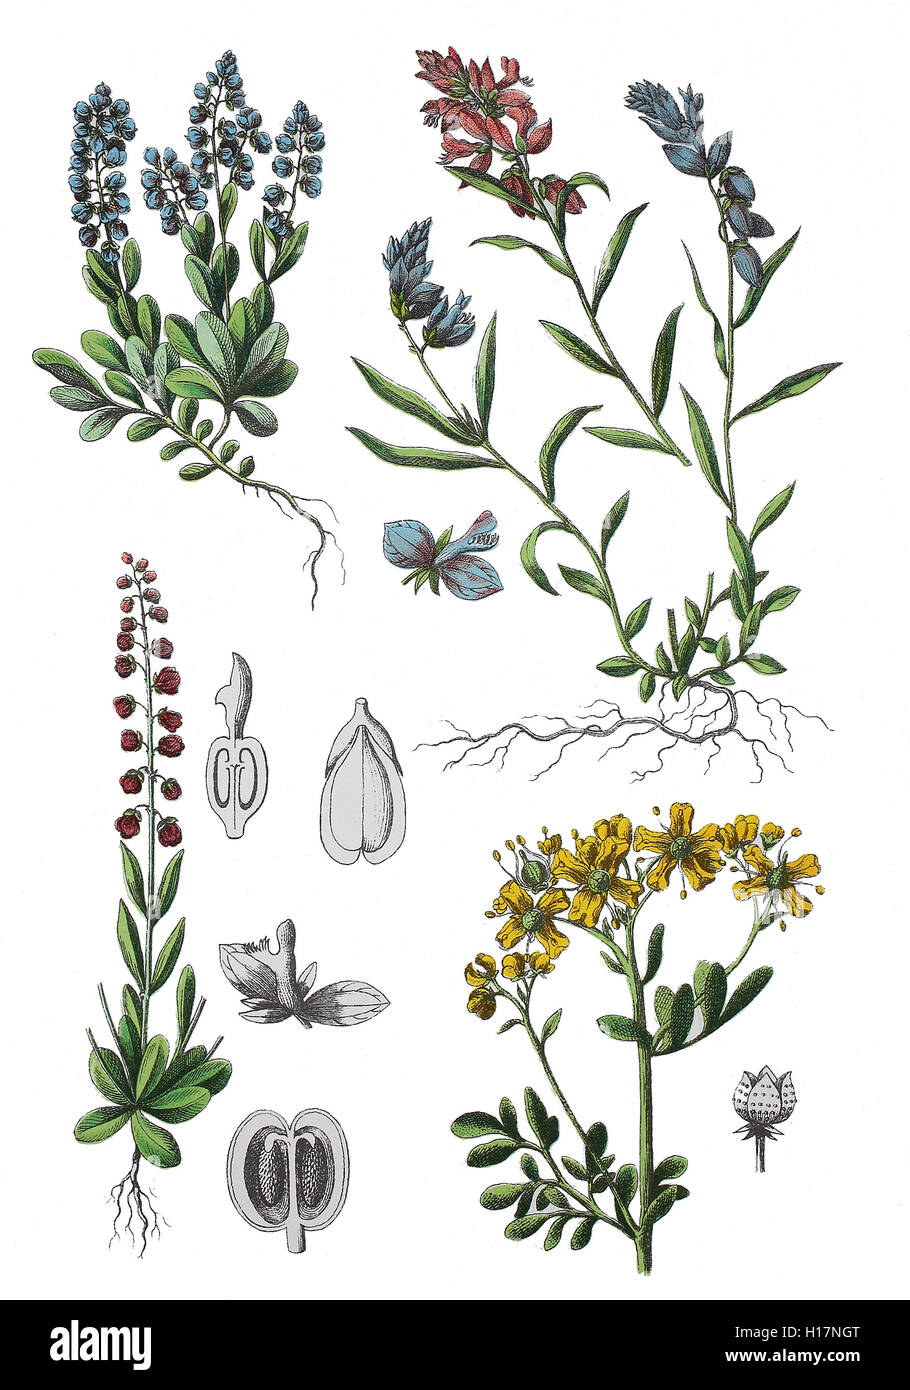 Bittere Kreuzblume, Polygala amara (links oben und unten), Gewoehnliche Kreuzblume auch Gewoehnliches Kreuzbluemchen, Polygala vulgaris (rechts oben),  Weinraute, Ruta graveolens (unten rechts) Stock Photo